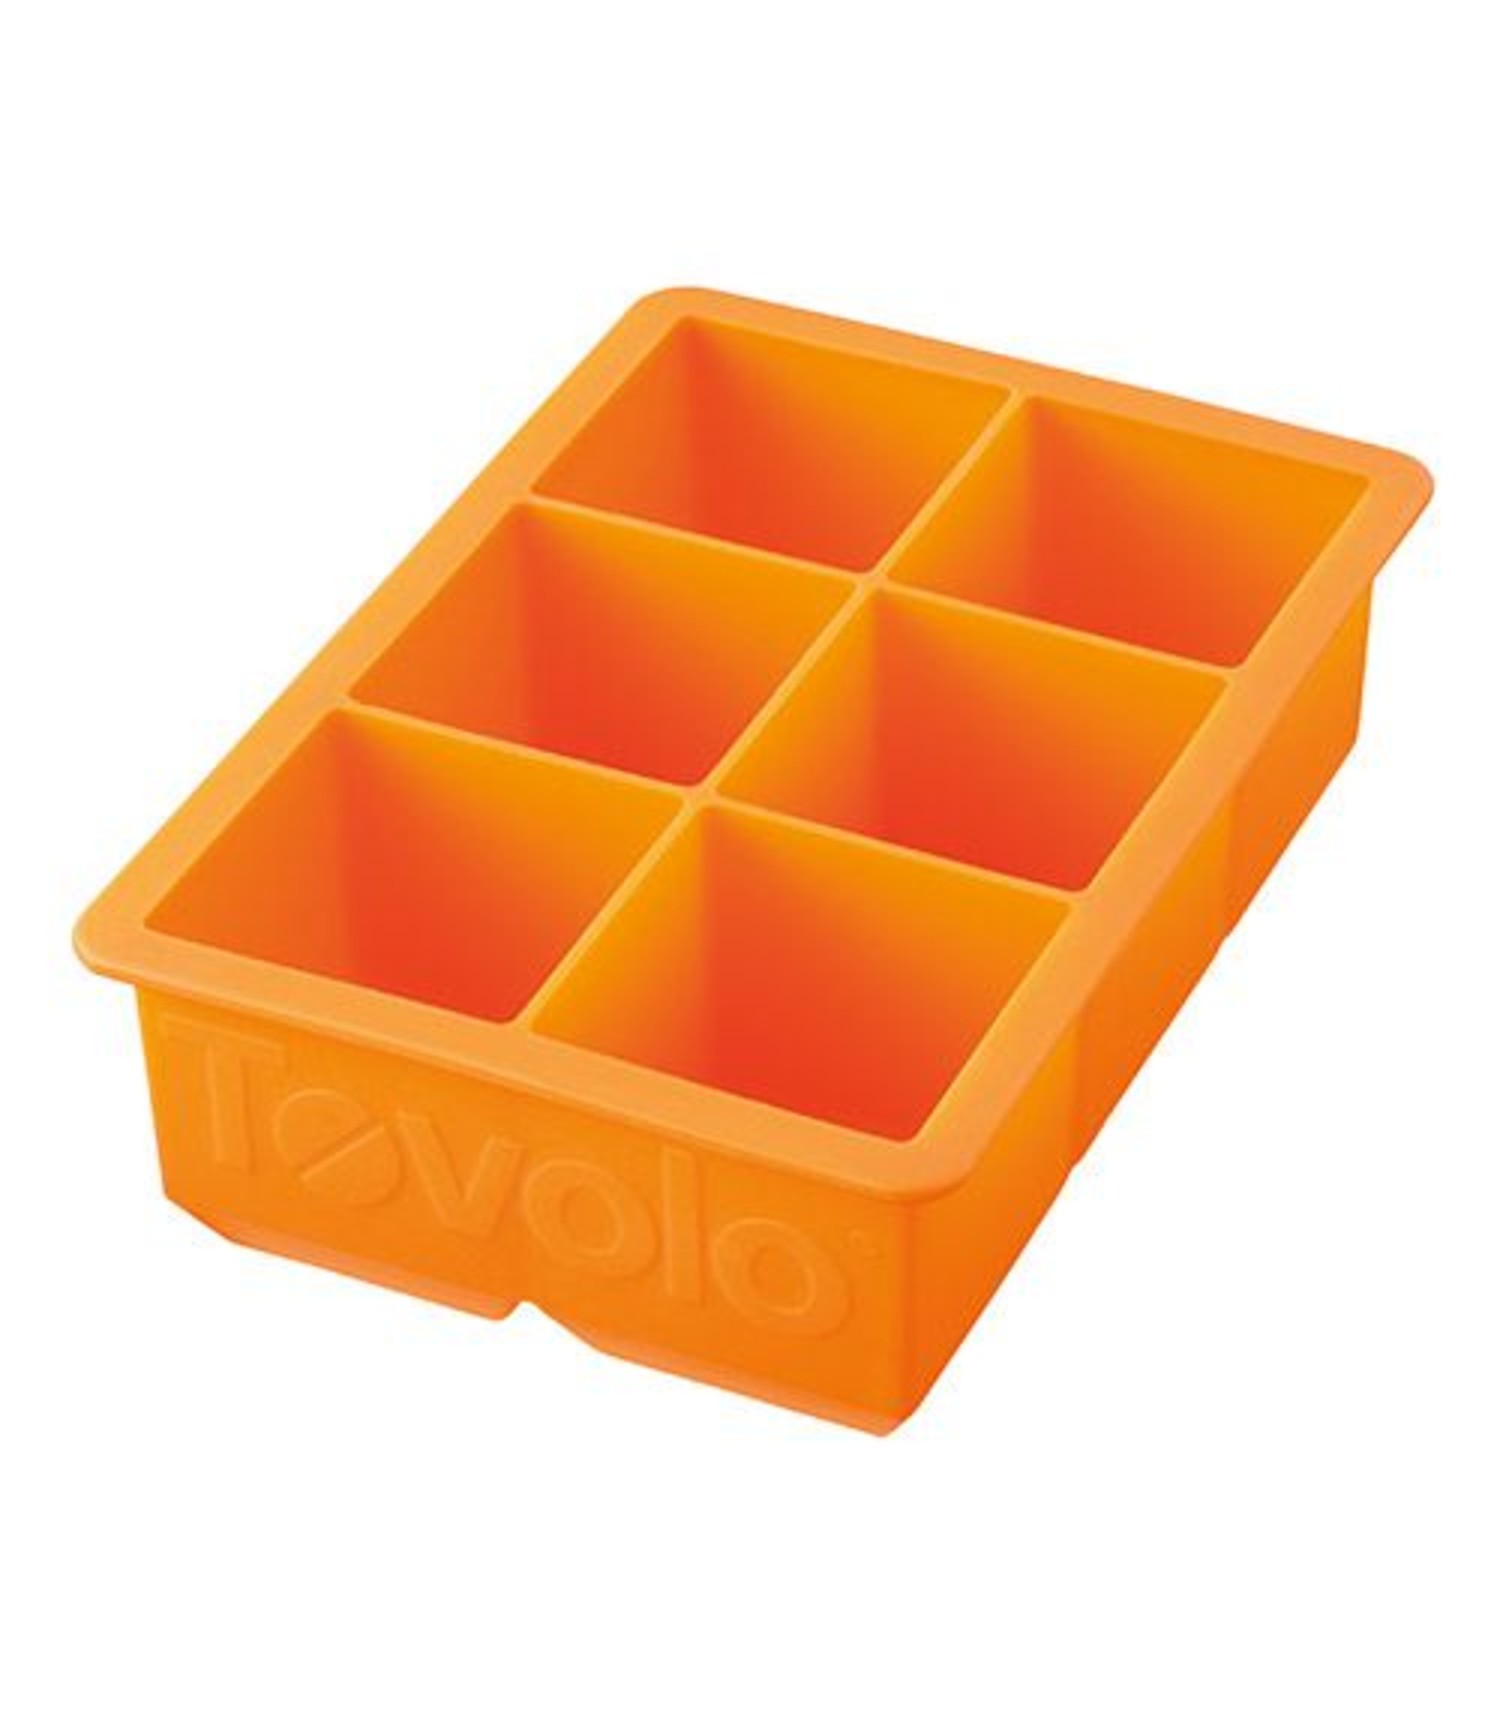 https://cdn.shoplightspeed.com/shops/606142/files/1031323/1500x4000x3/tovolo-king-cube-2x2-ice-cube-tray.jpg